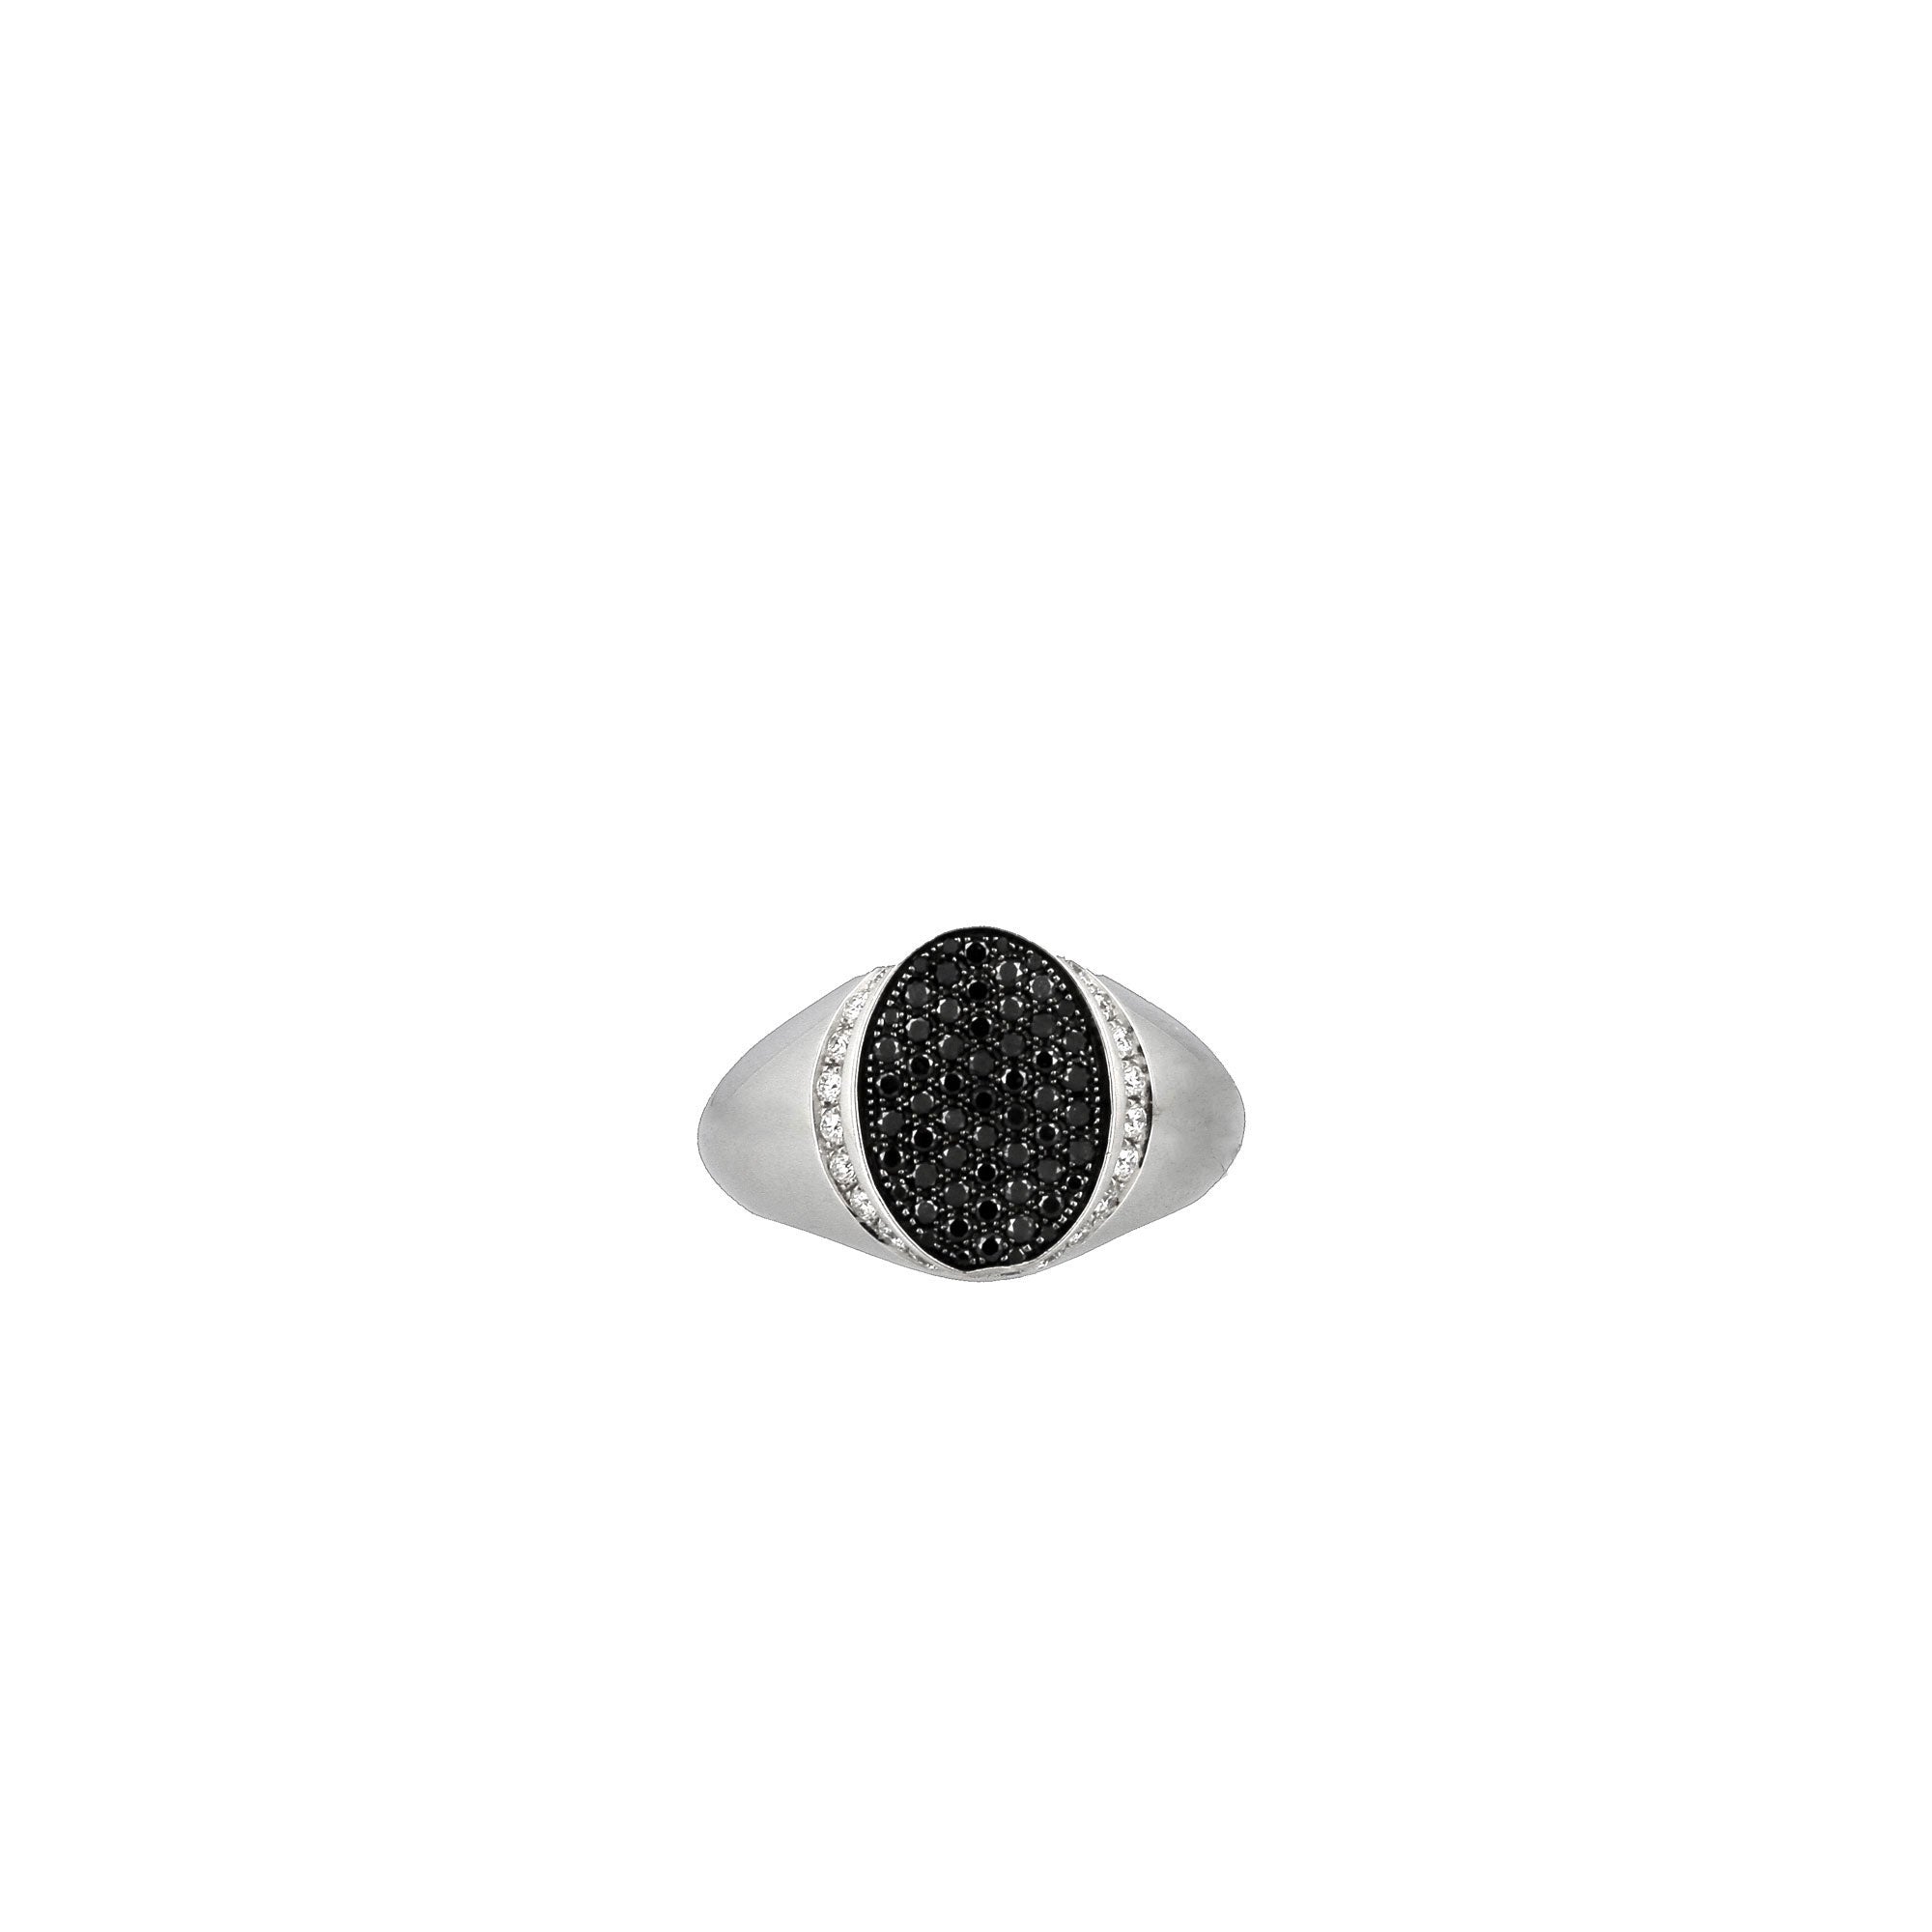 Black Diamonds and White Gold Signet Ring